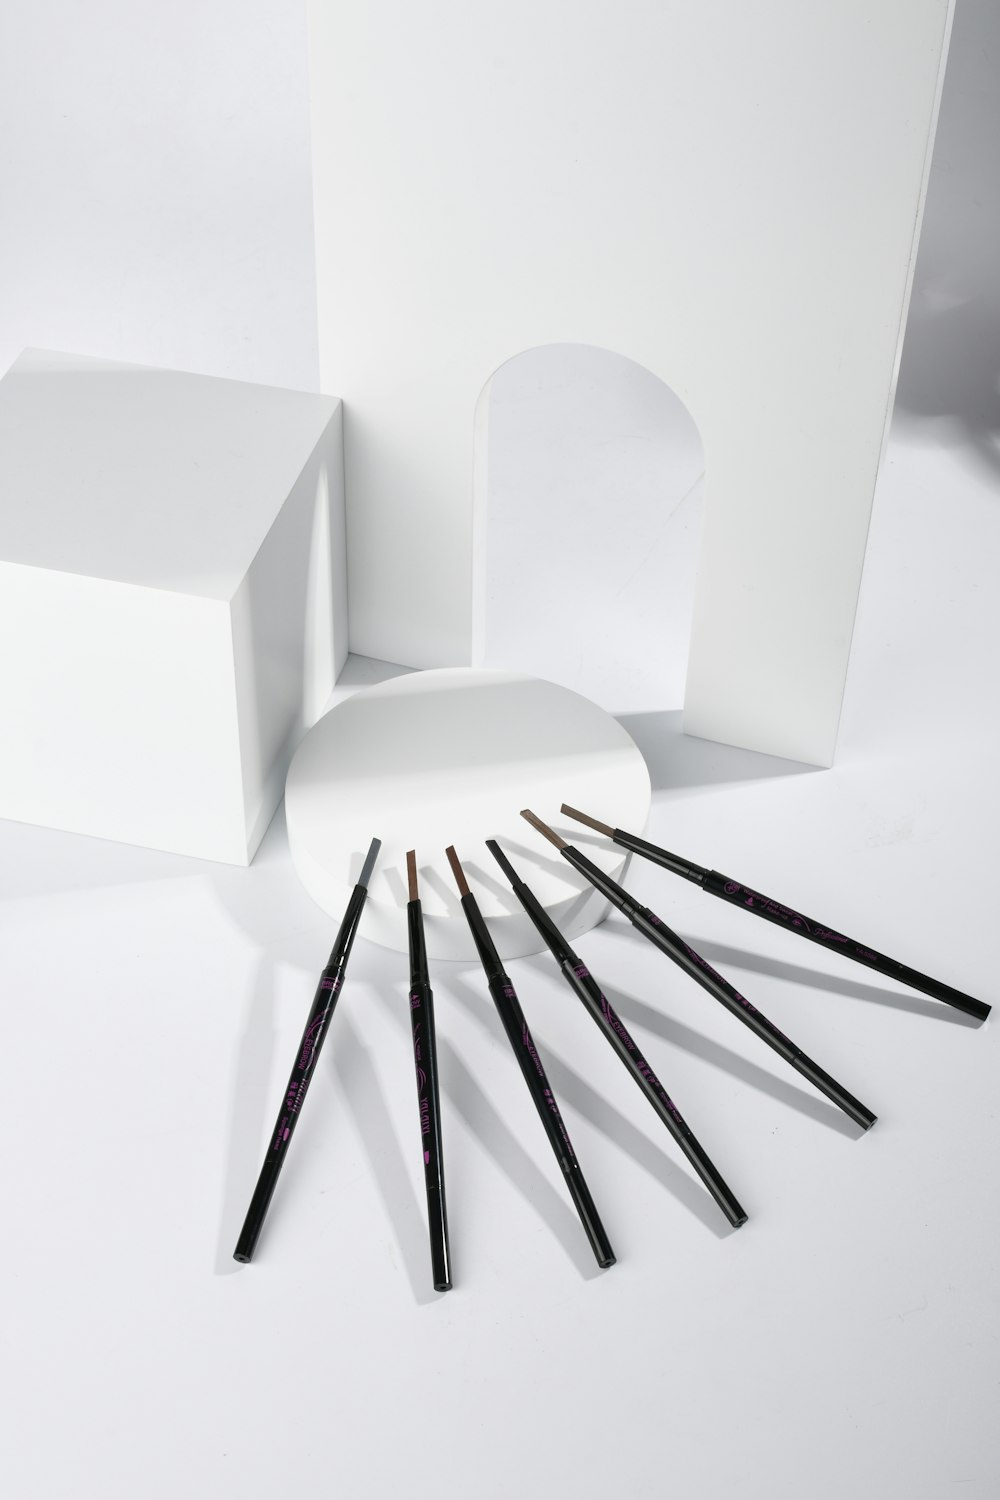 white box with black sticks